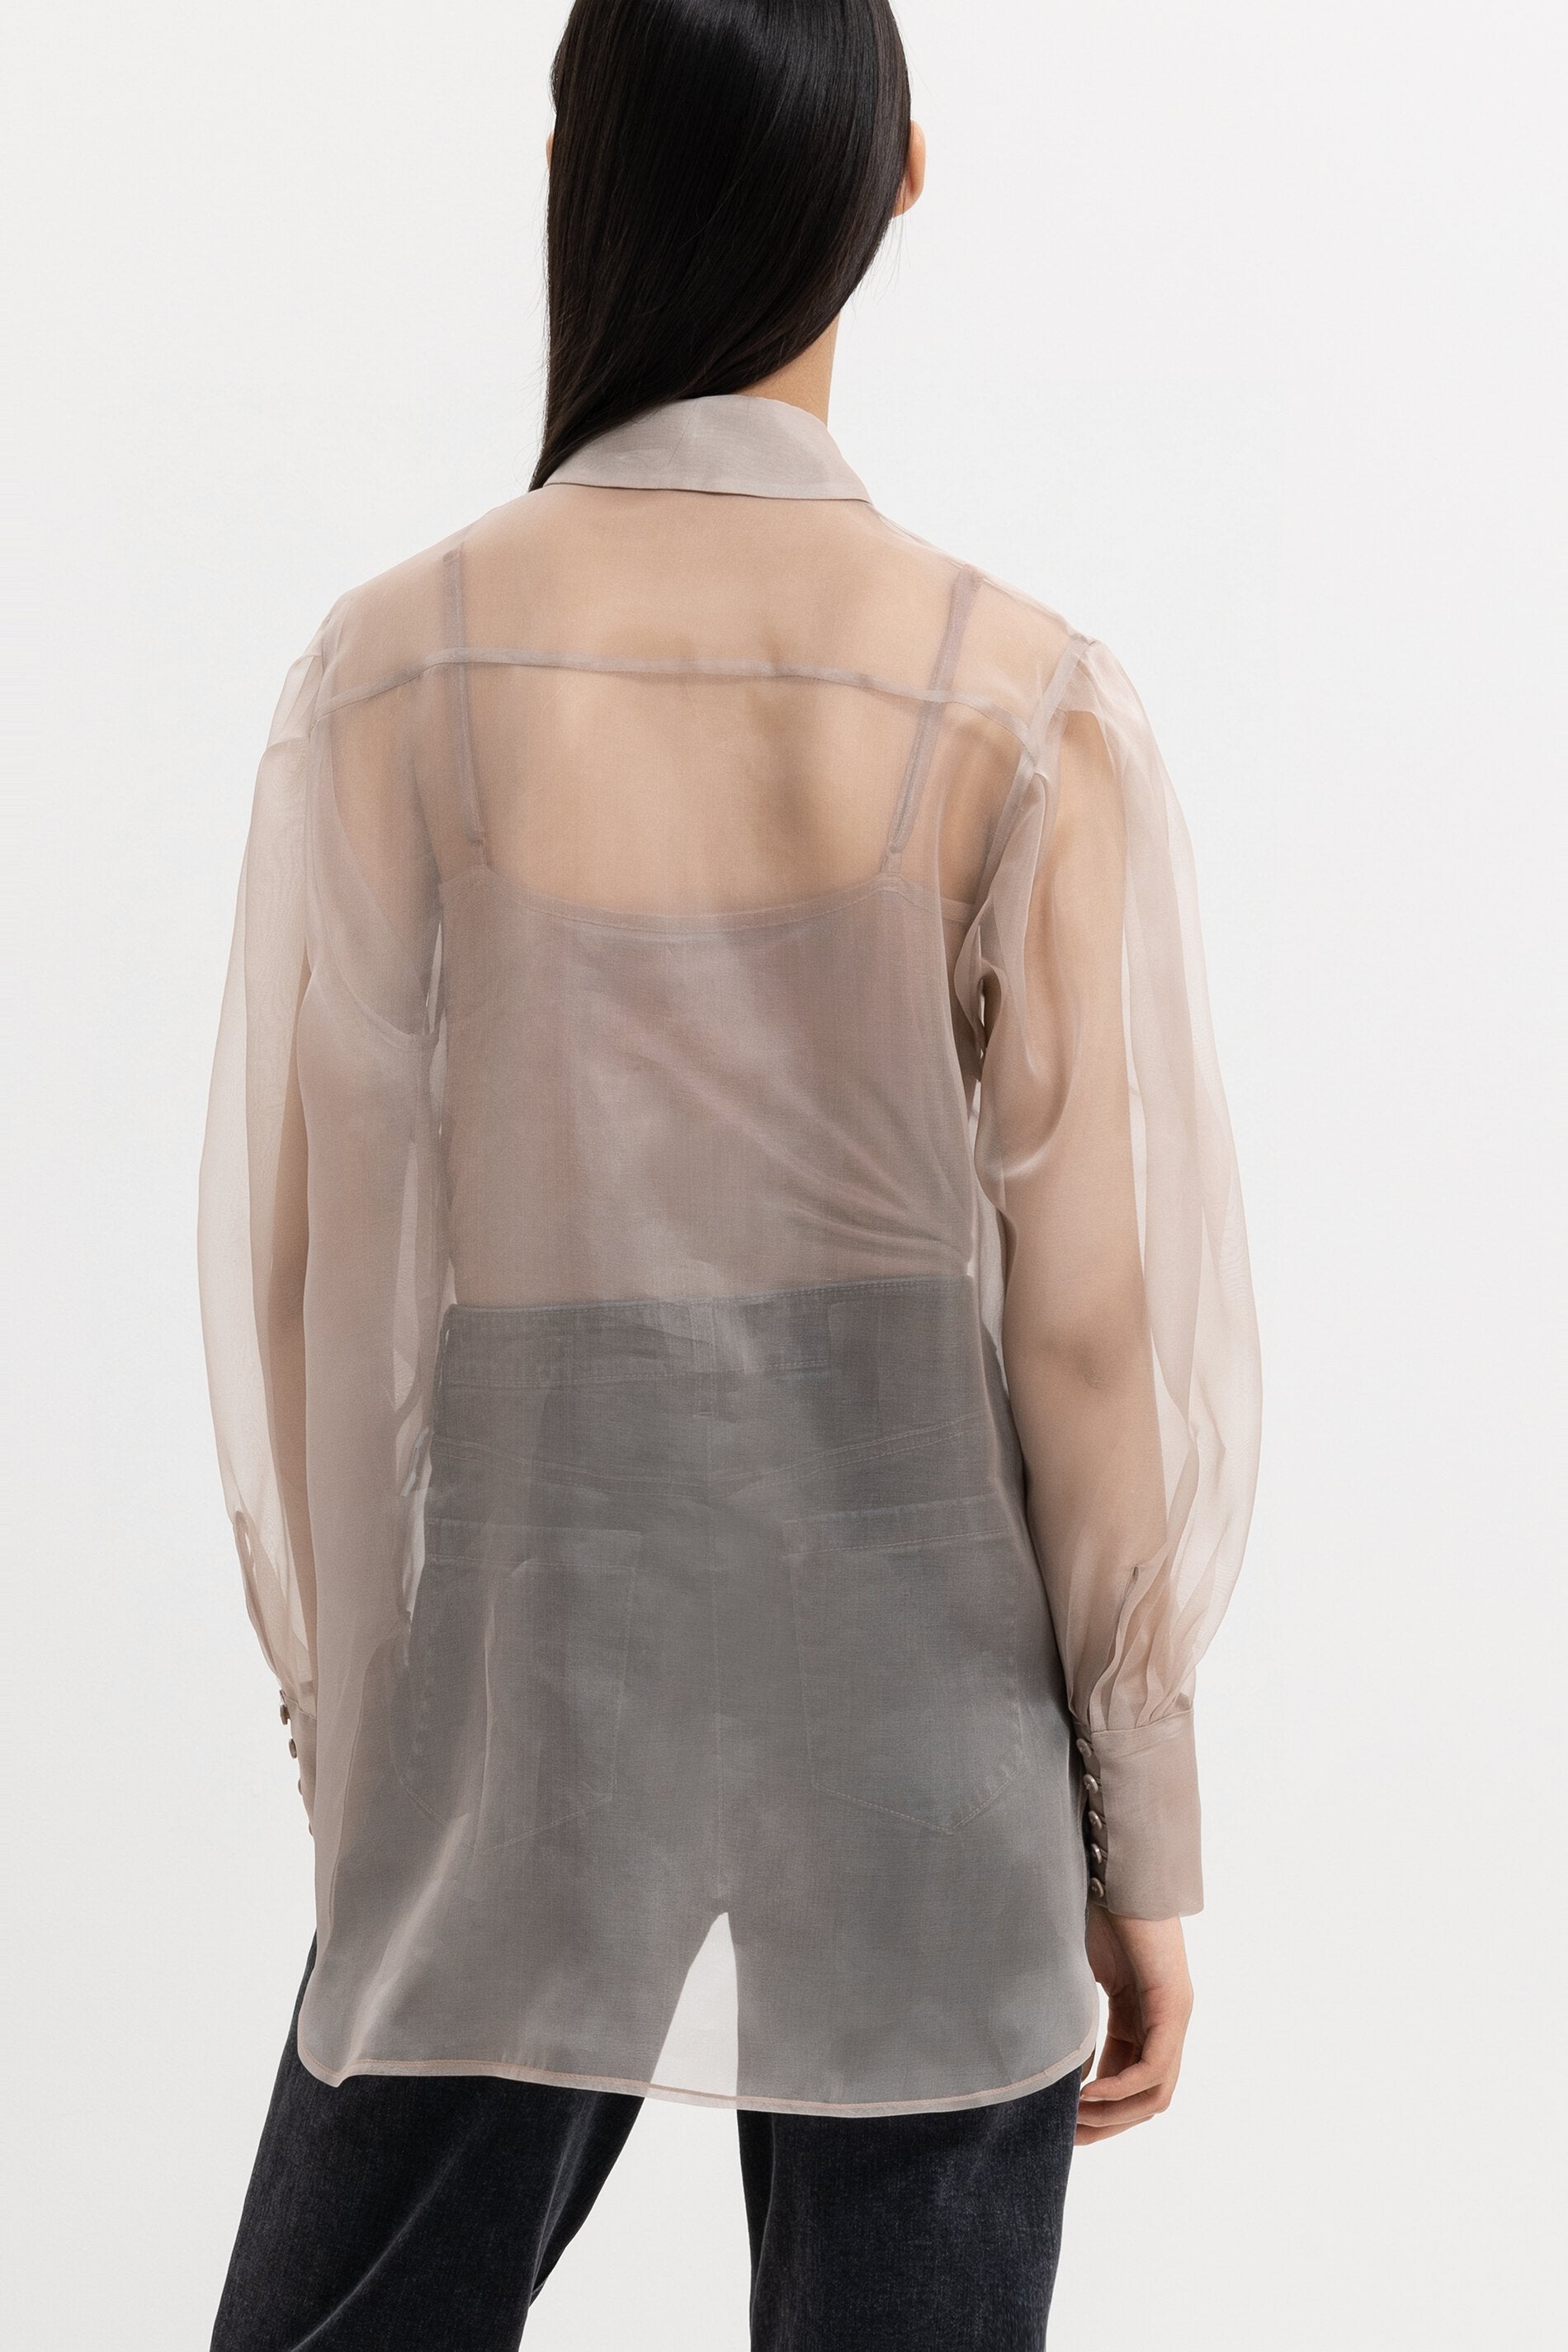 LUISA-CERANO-OUTLET-SALE-Seidenhemd in Couture-Optik-ARCHIVIST